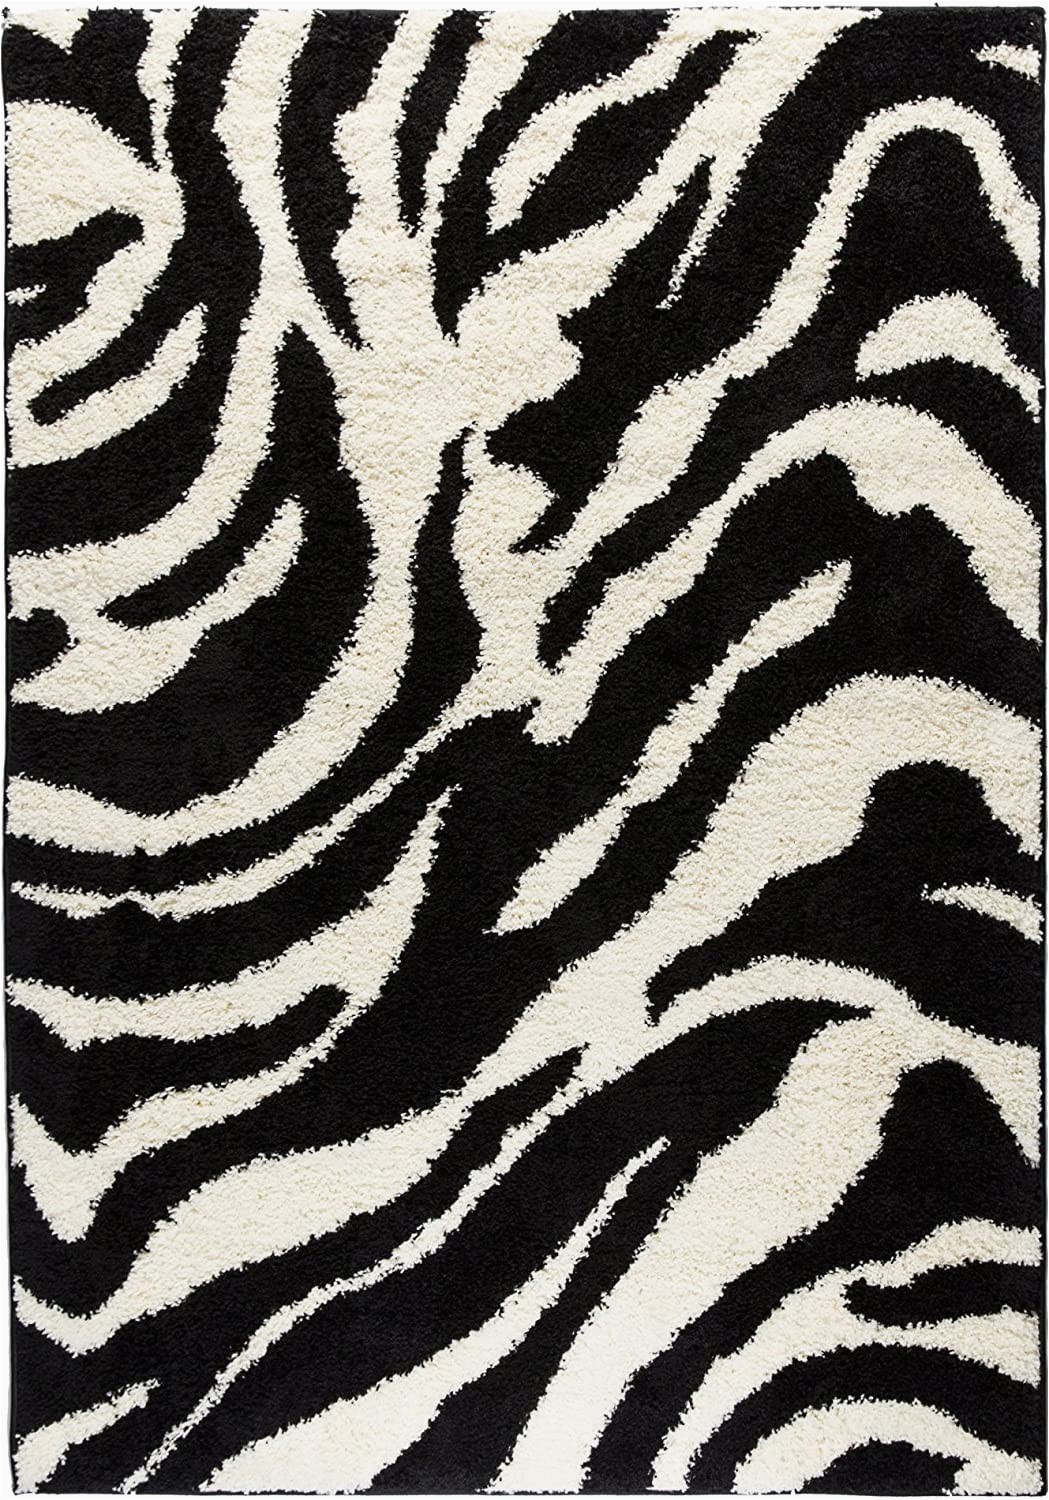 Black and White Plush area Rug Well Woven Madison Shag Safari Zebra Black Animal Print area Rug 3 3 X 5 3